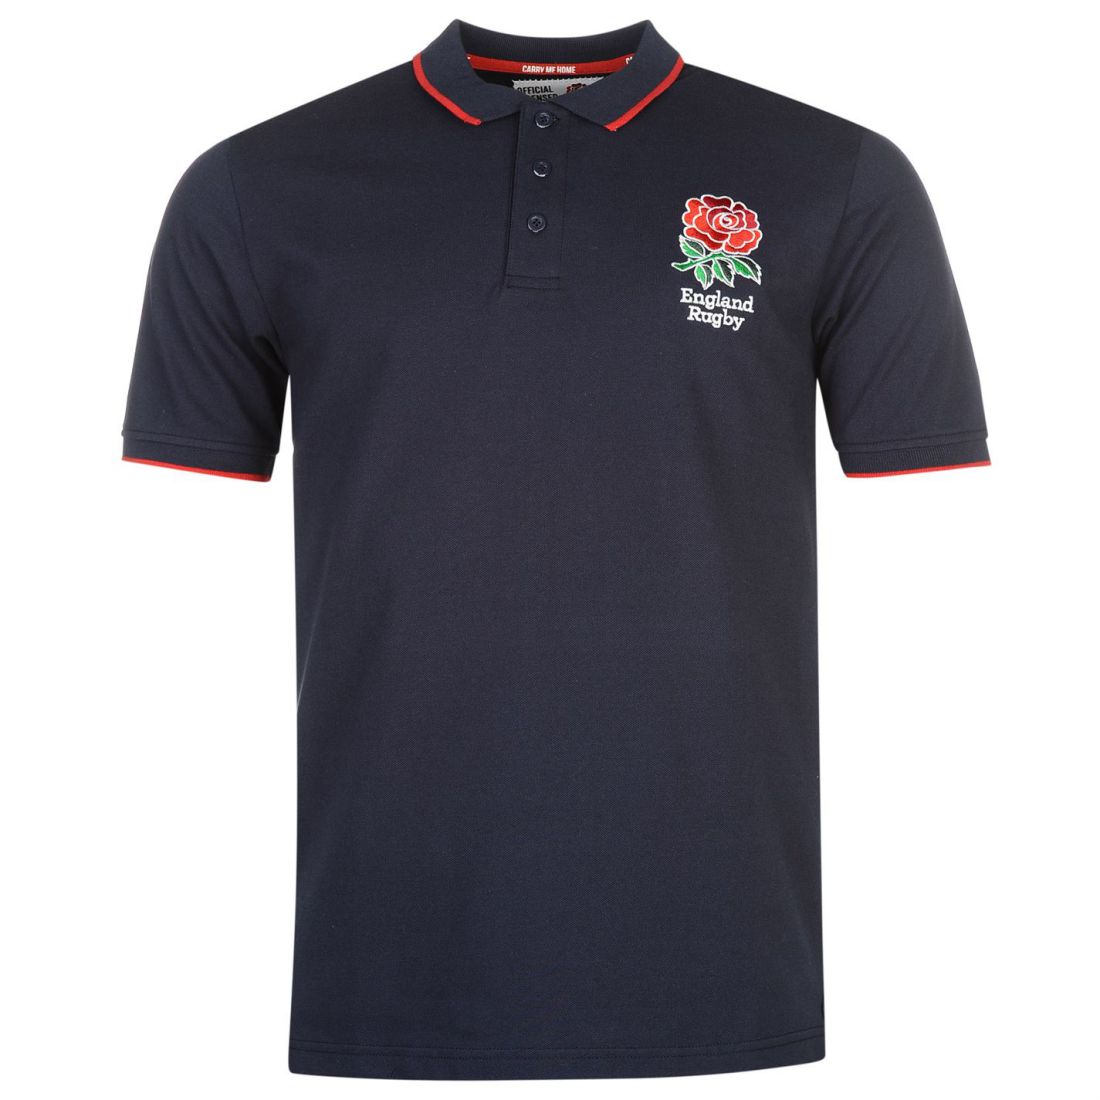 RFU MENS GENTS England Rugby Core Polo Shirt Tee Top Clothing - £11.99 ...